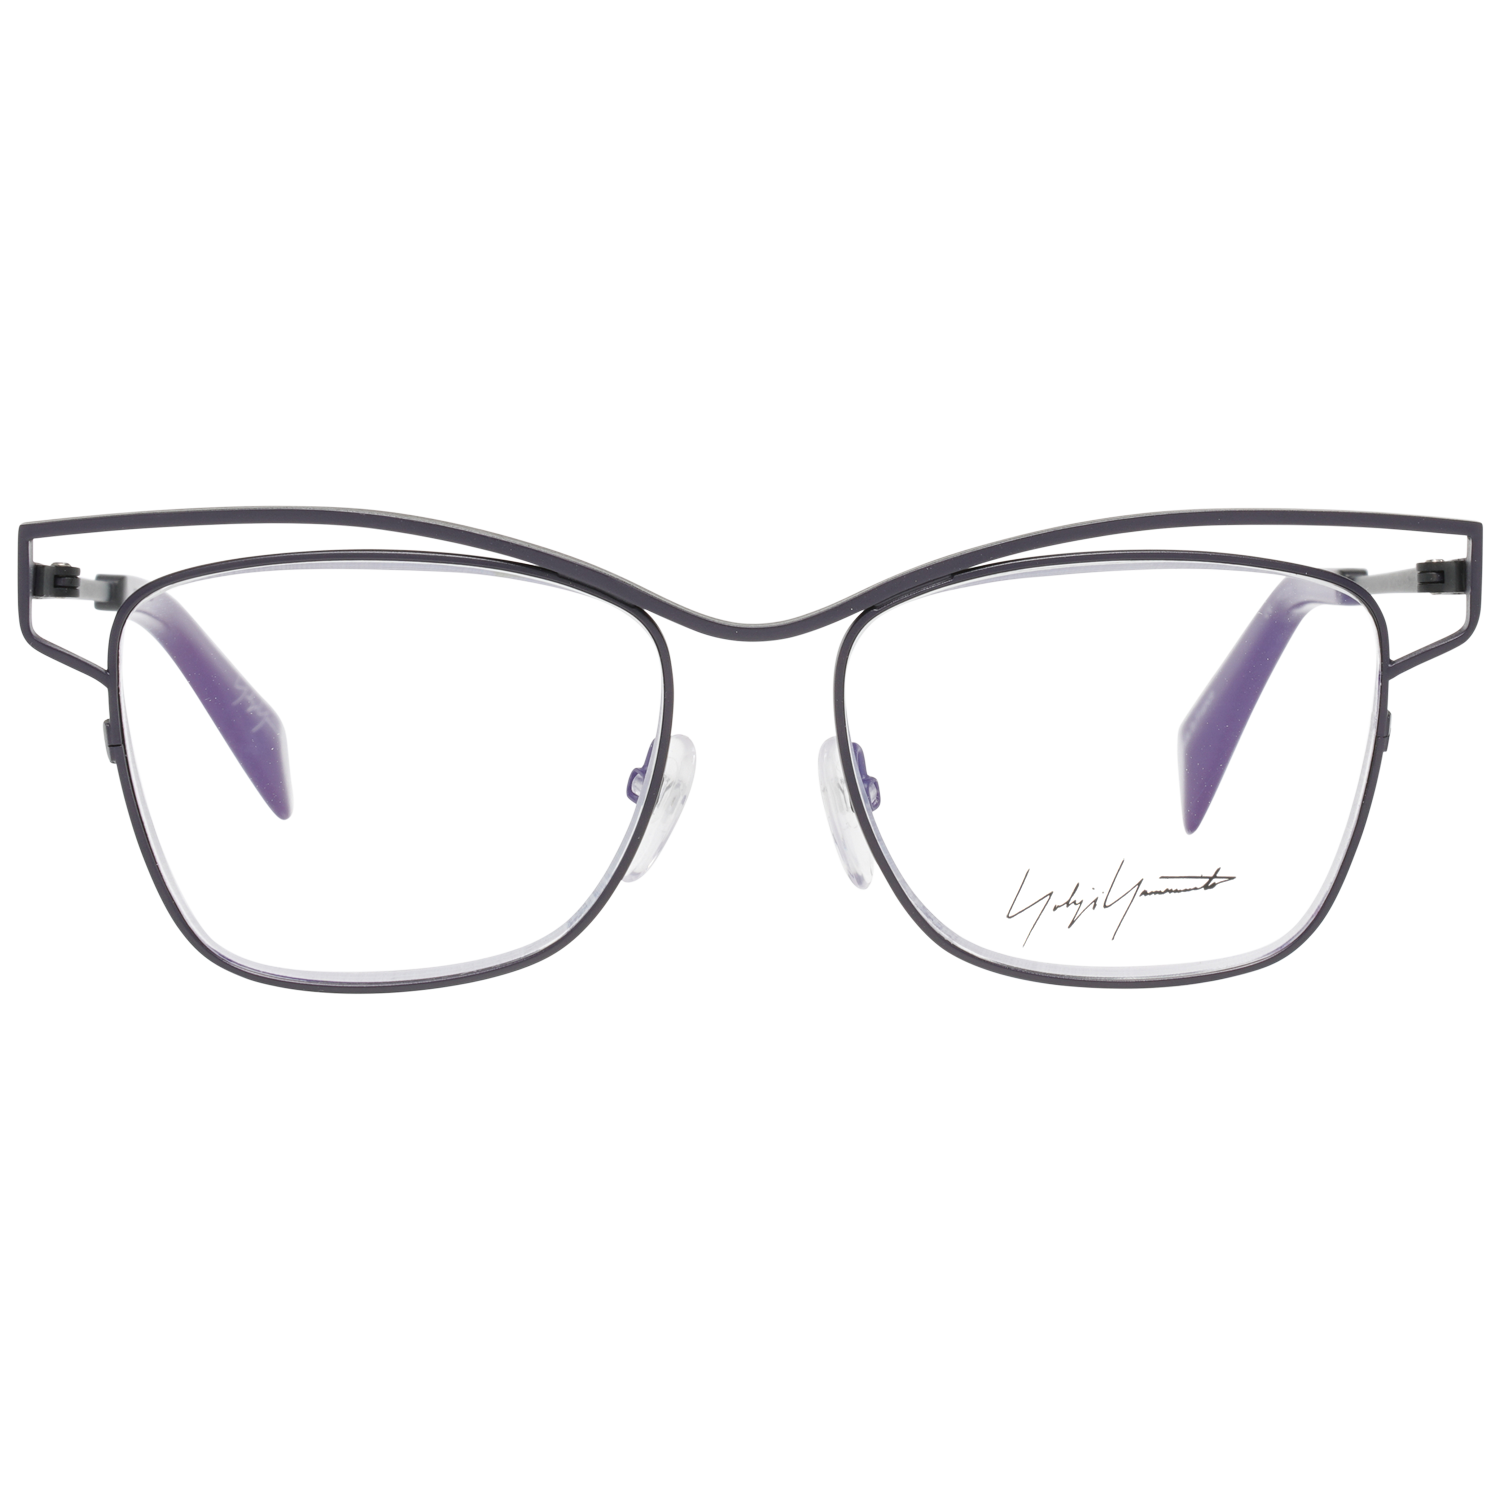 Yohji Yamamoto Frames Yohji Yamamoto Optical Frame YY3019 701 51 Eyeglasses Eyewear UK USA Australia 